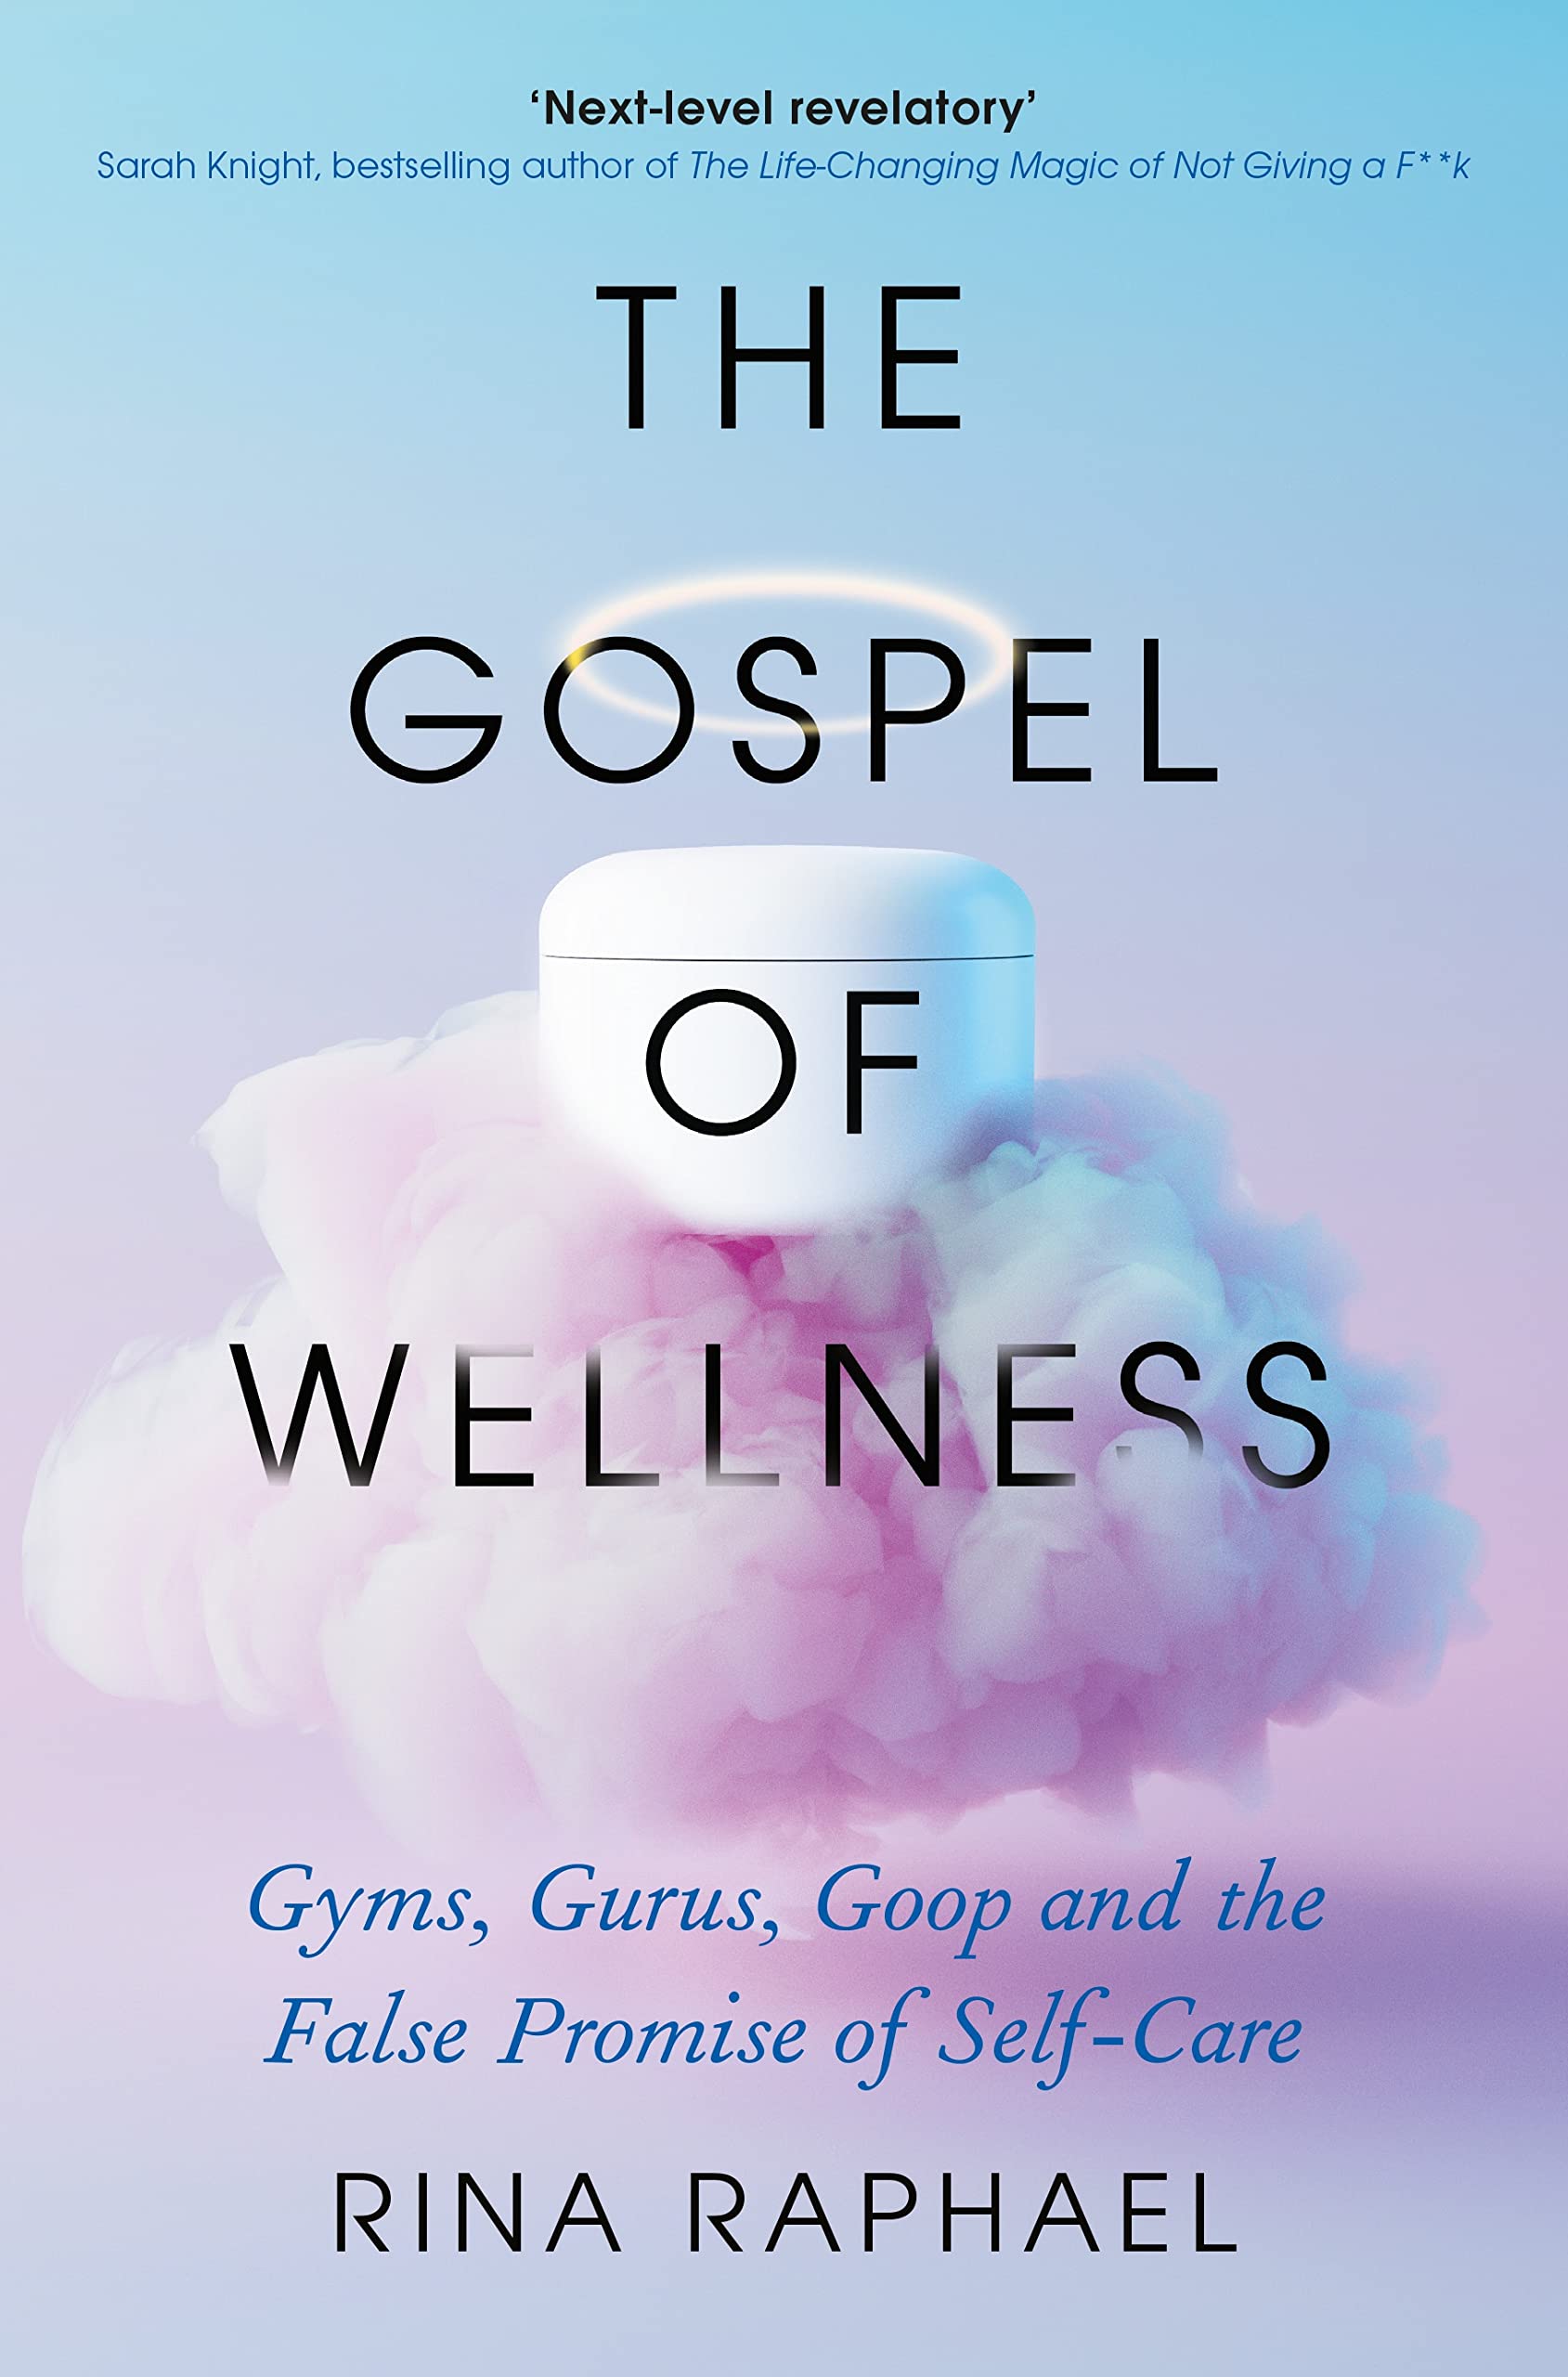 Rina Raphael’s ‘The Gospel of Wellness’